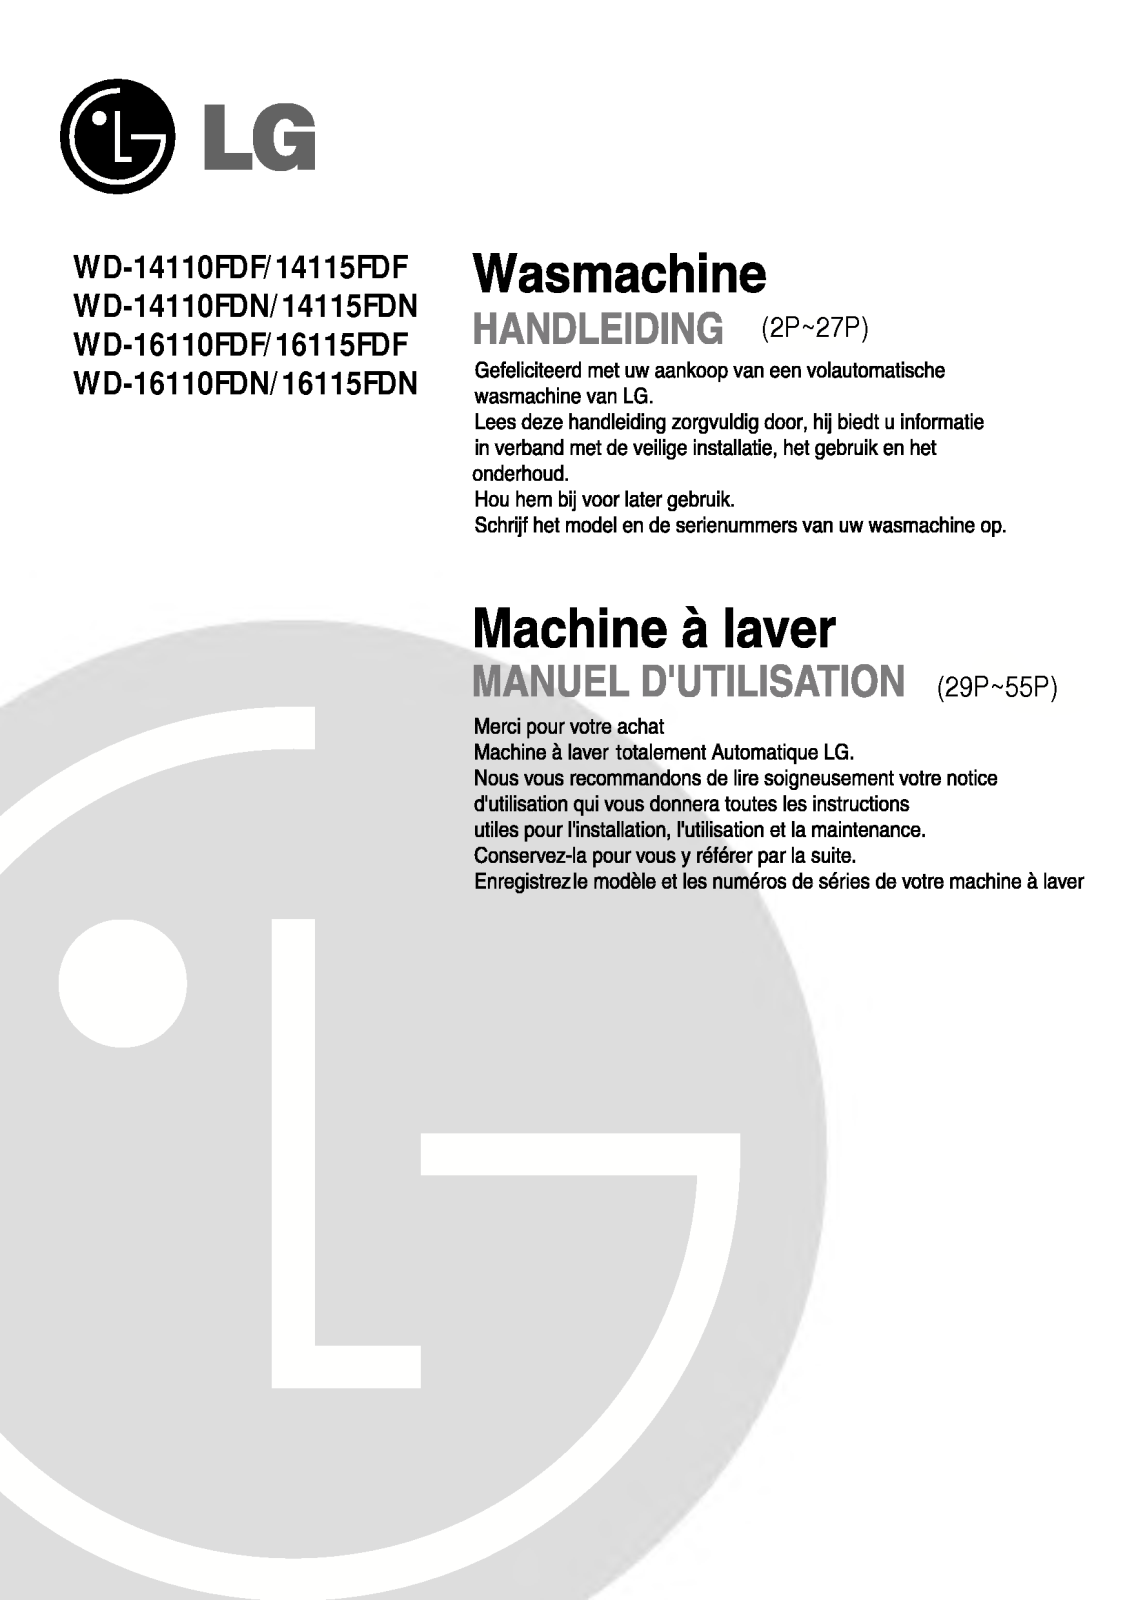 LG WD-14115FDF User Manual